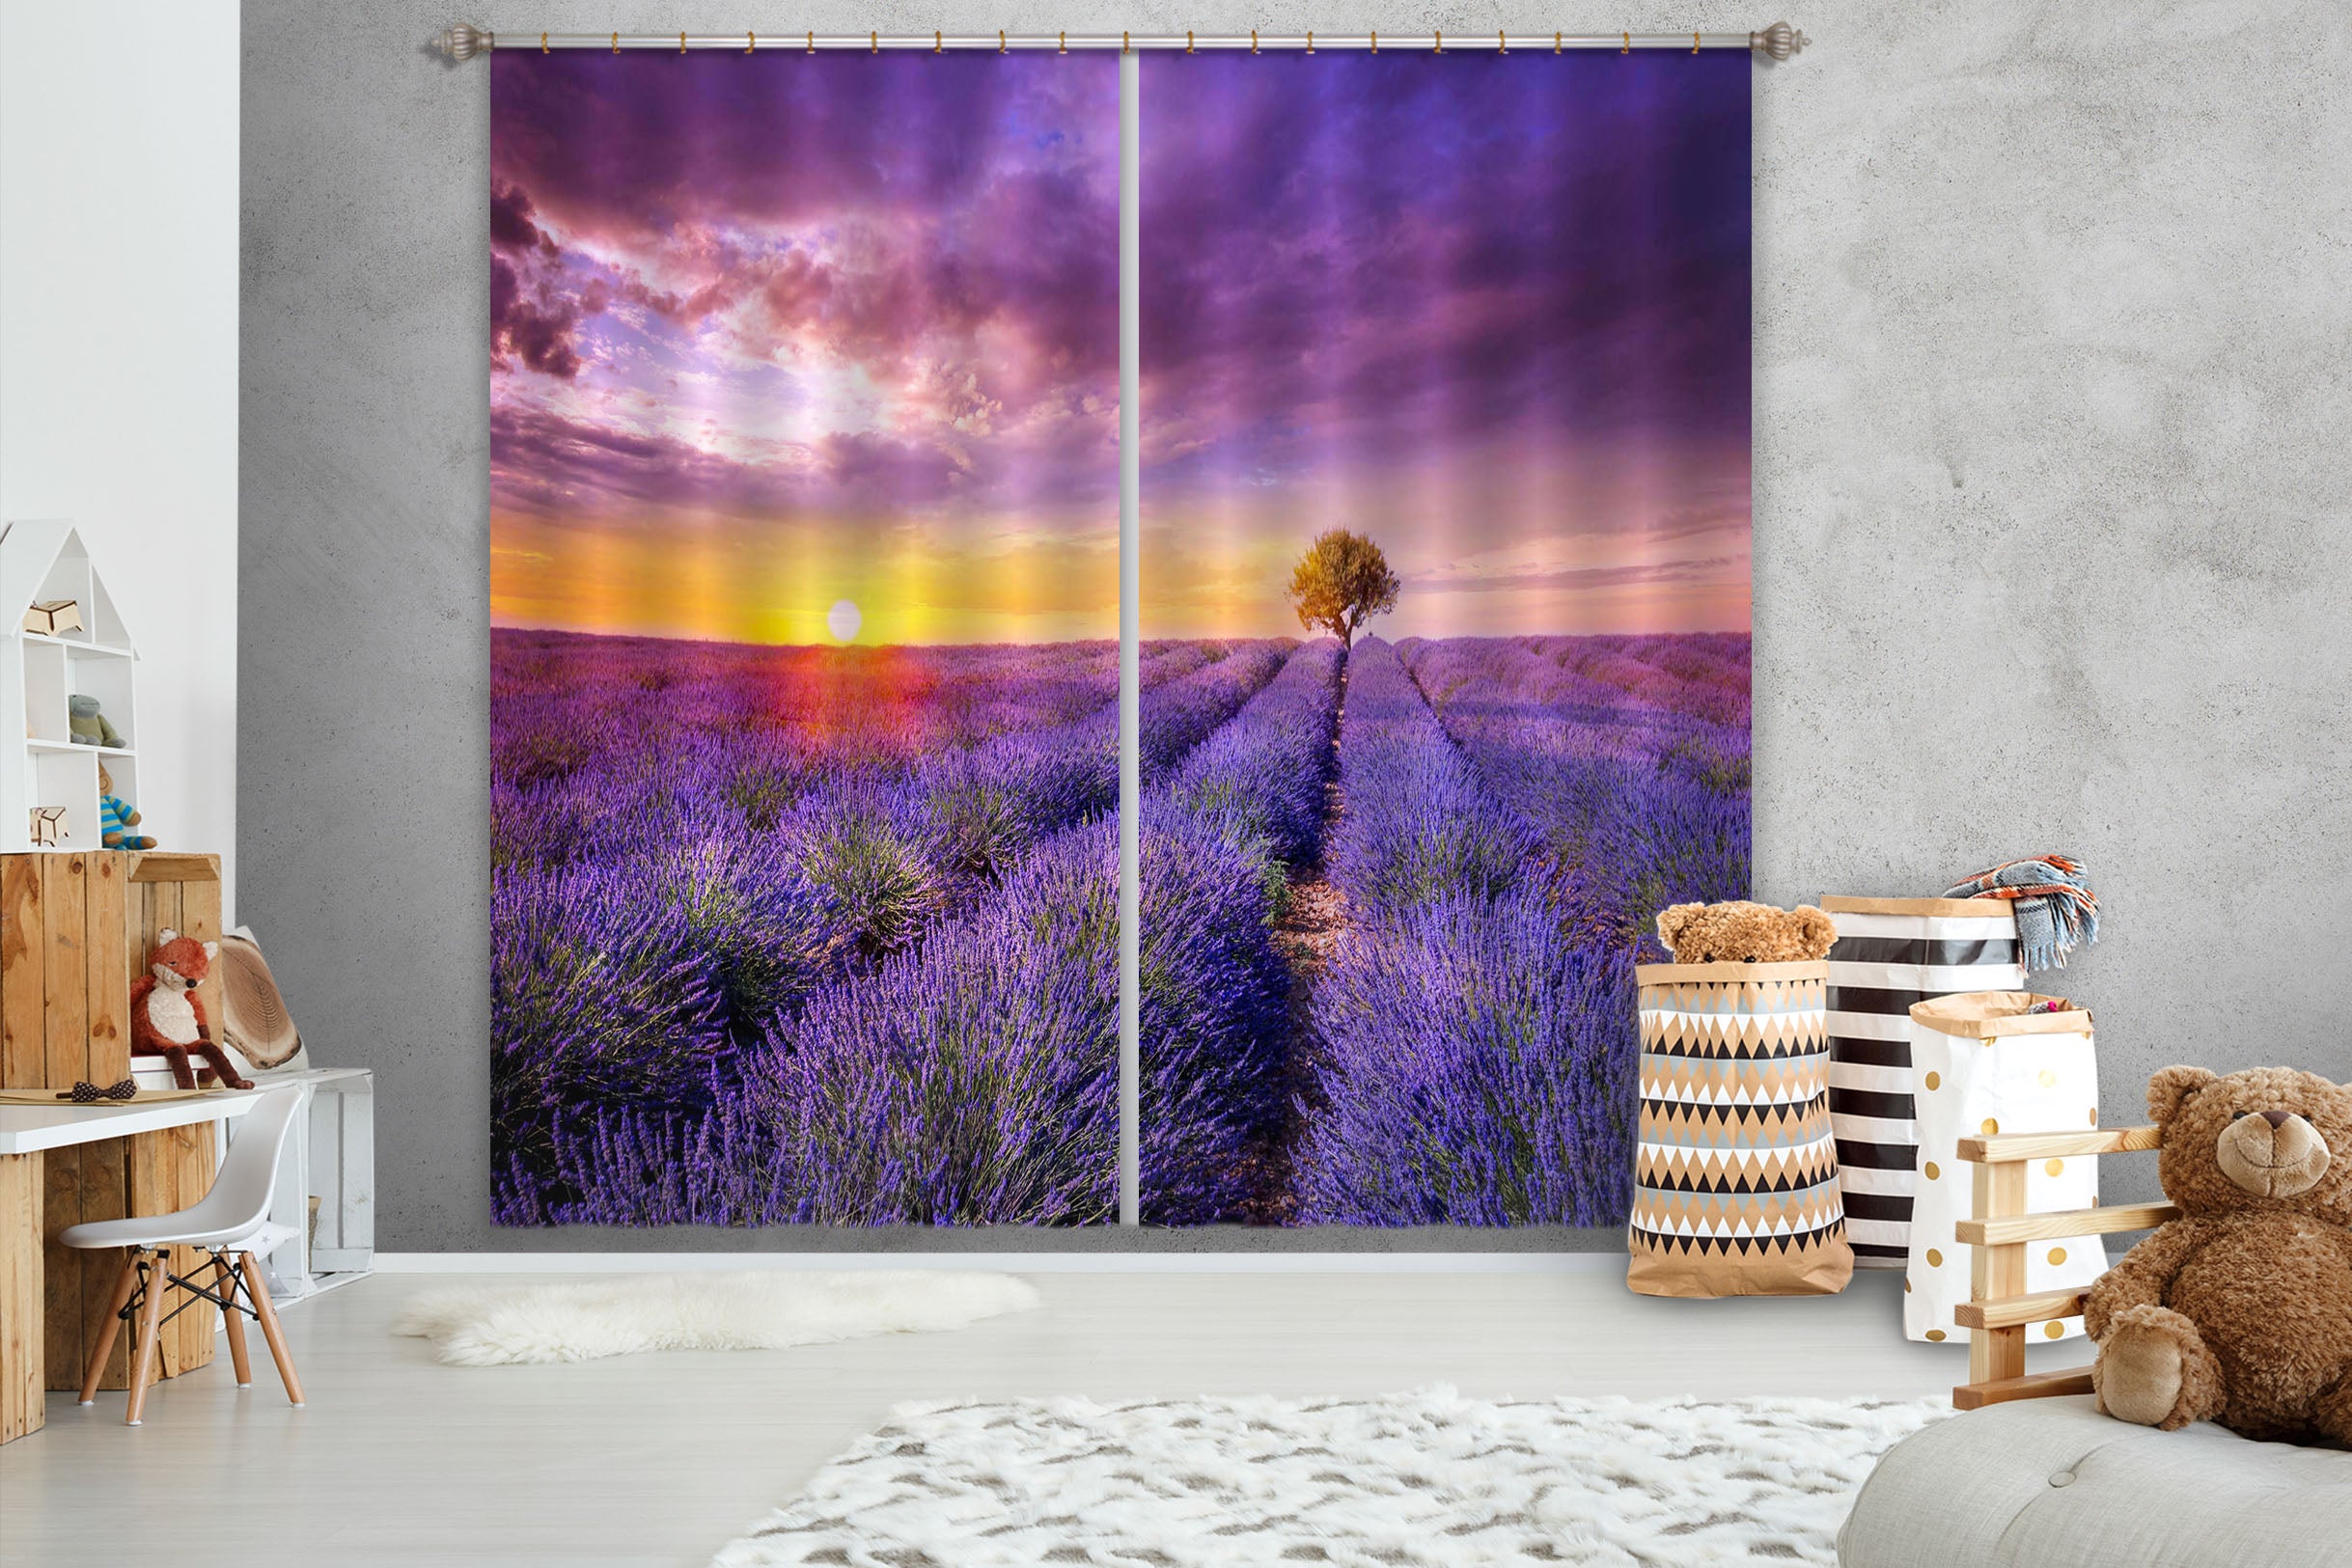 3D Lavender Estate 106 Marco Carmassi Curtain Curtains Drapes